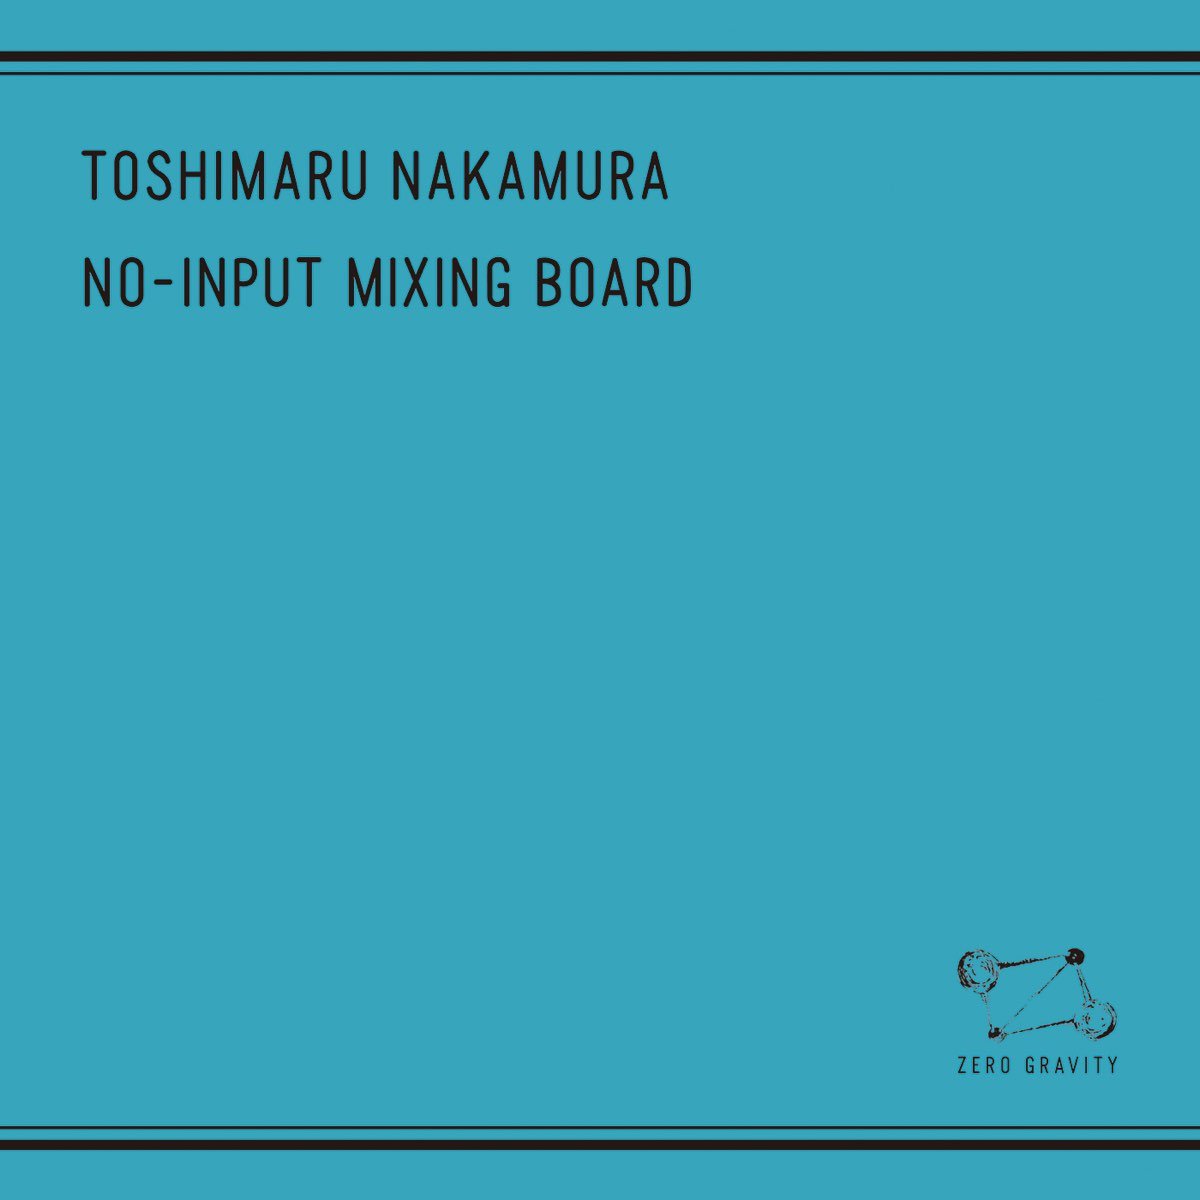 Nakamura, Toshimaru "No-Input Mixing Board"